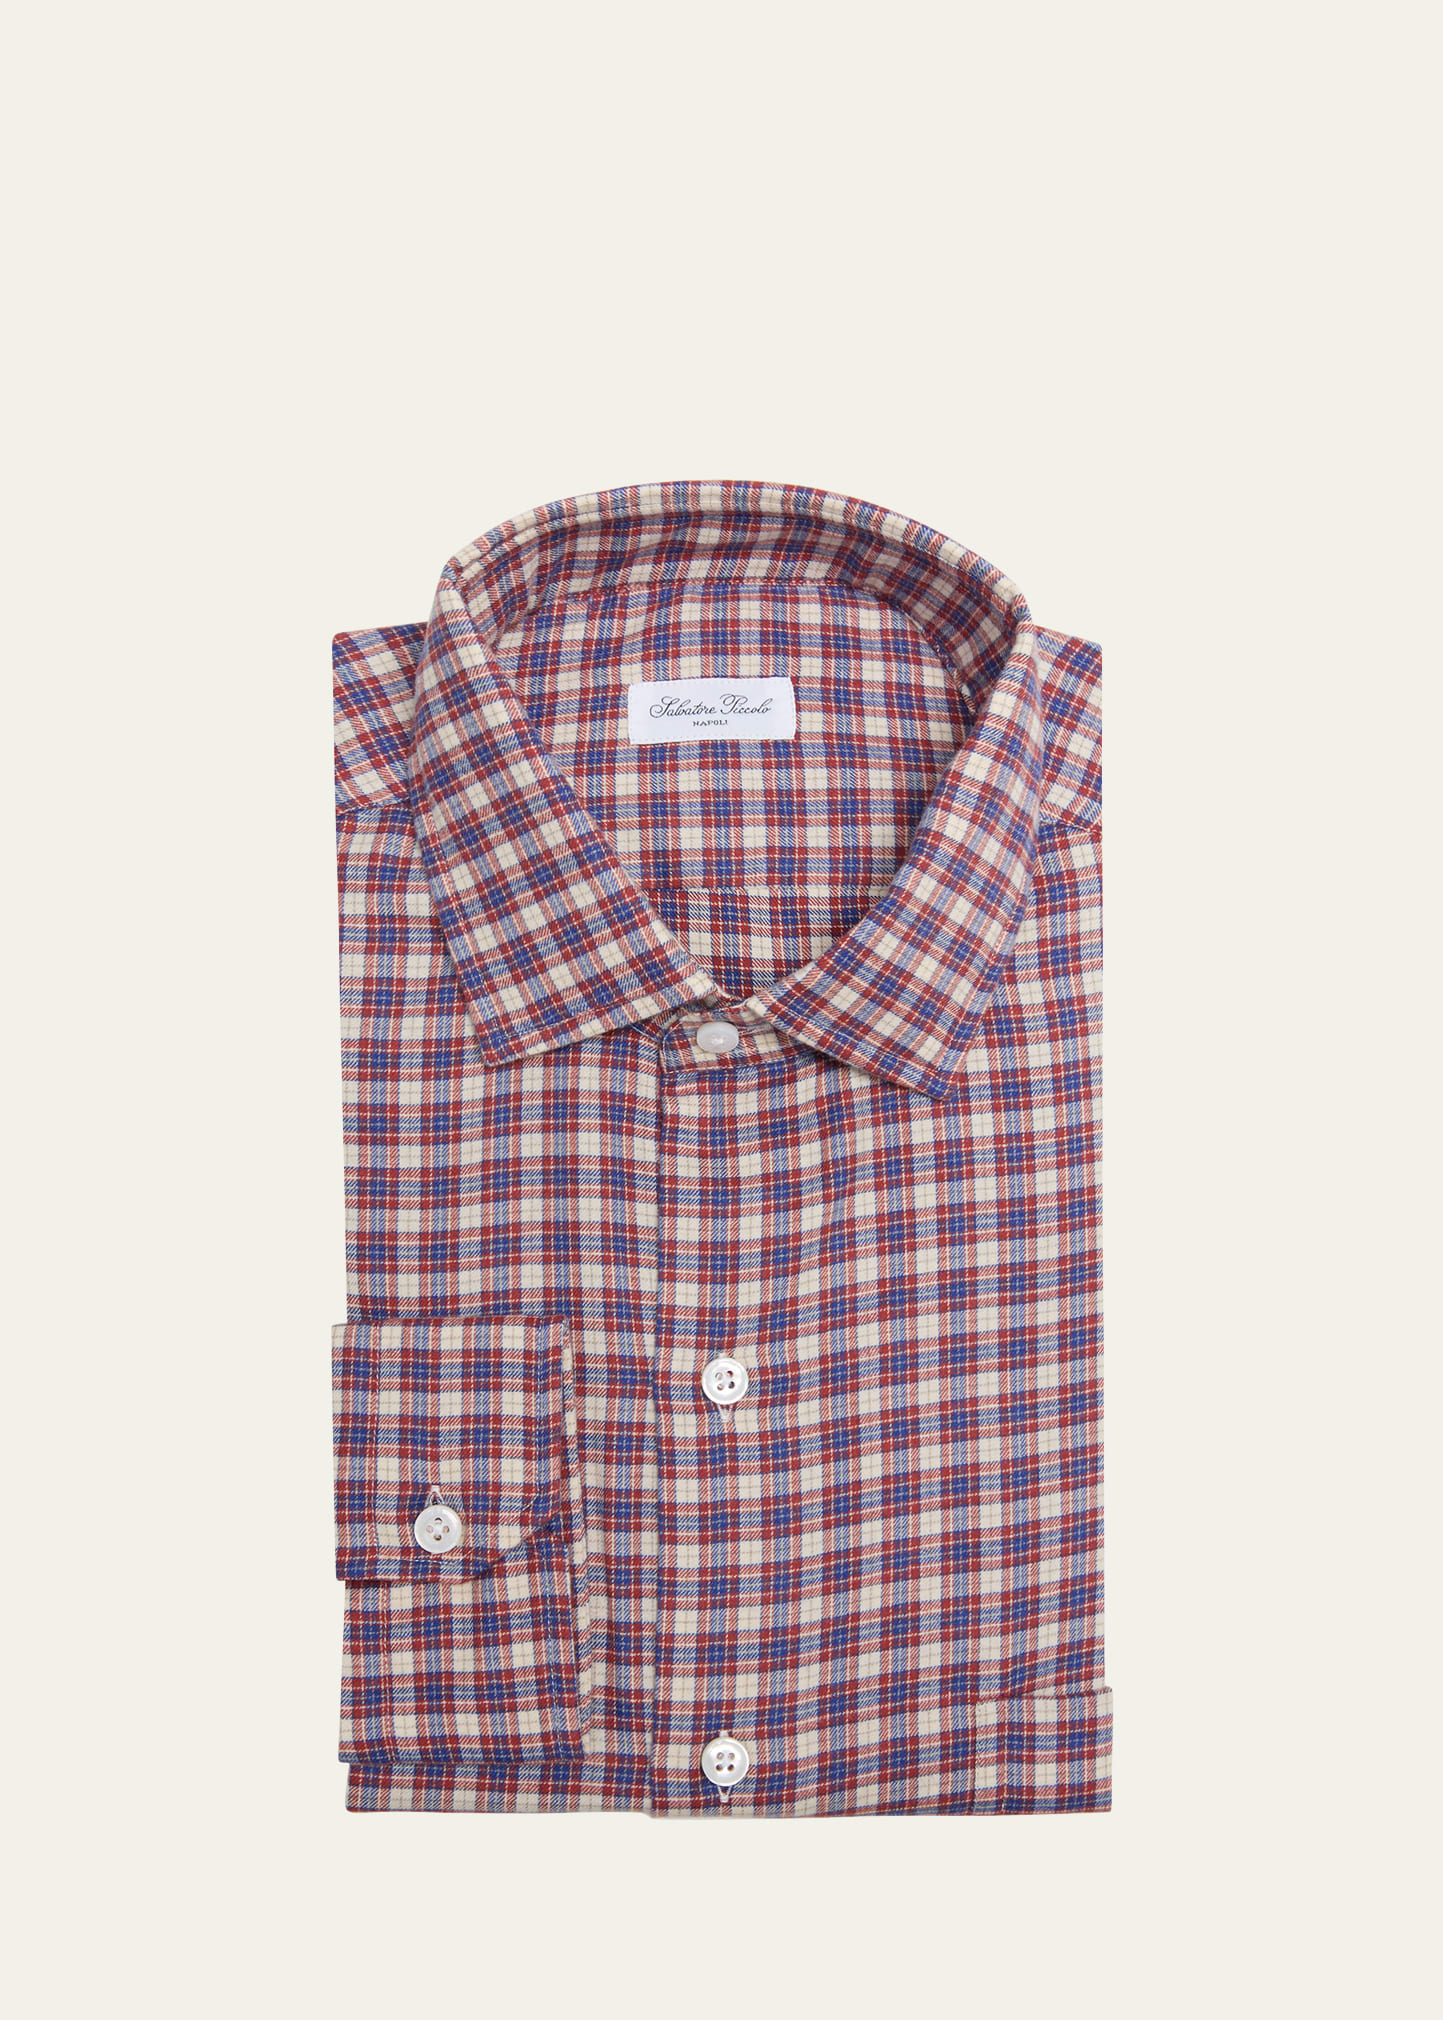 Men's Flannel Check Casual Button Down Shirt